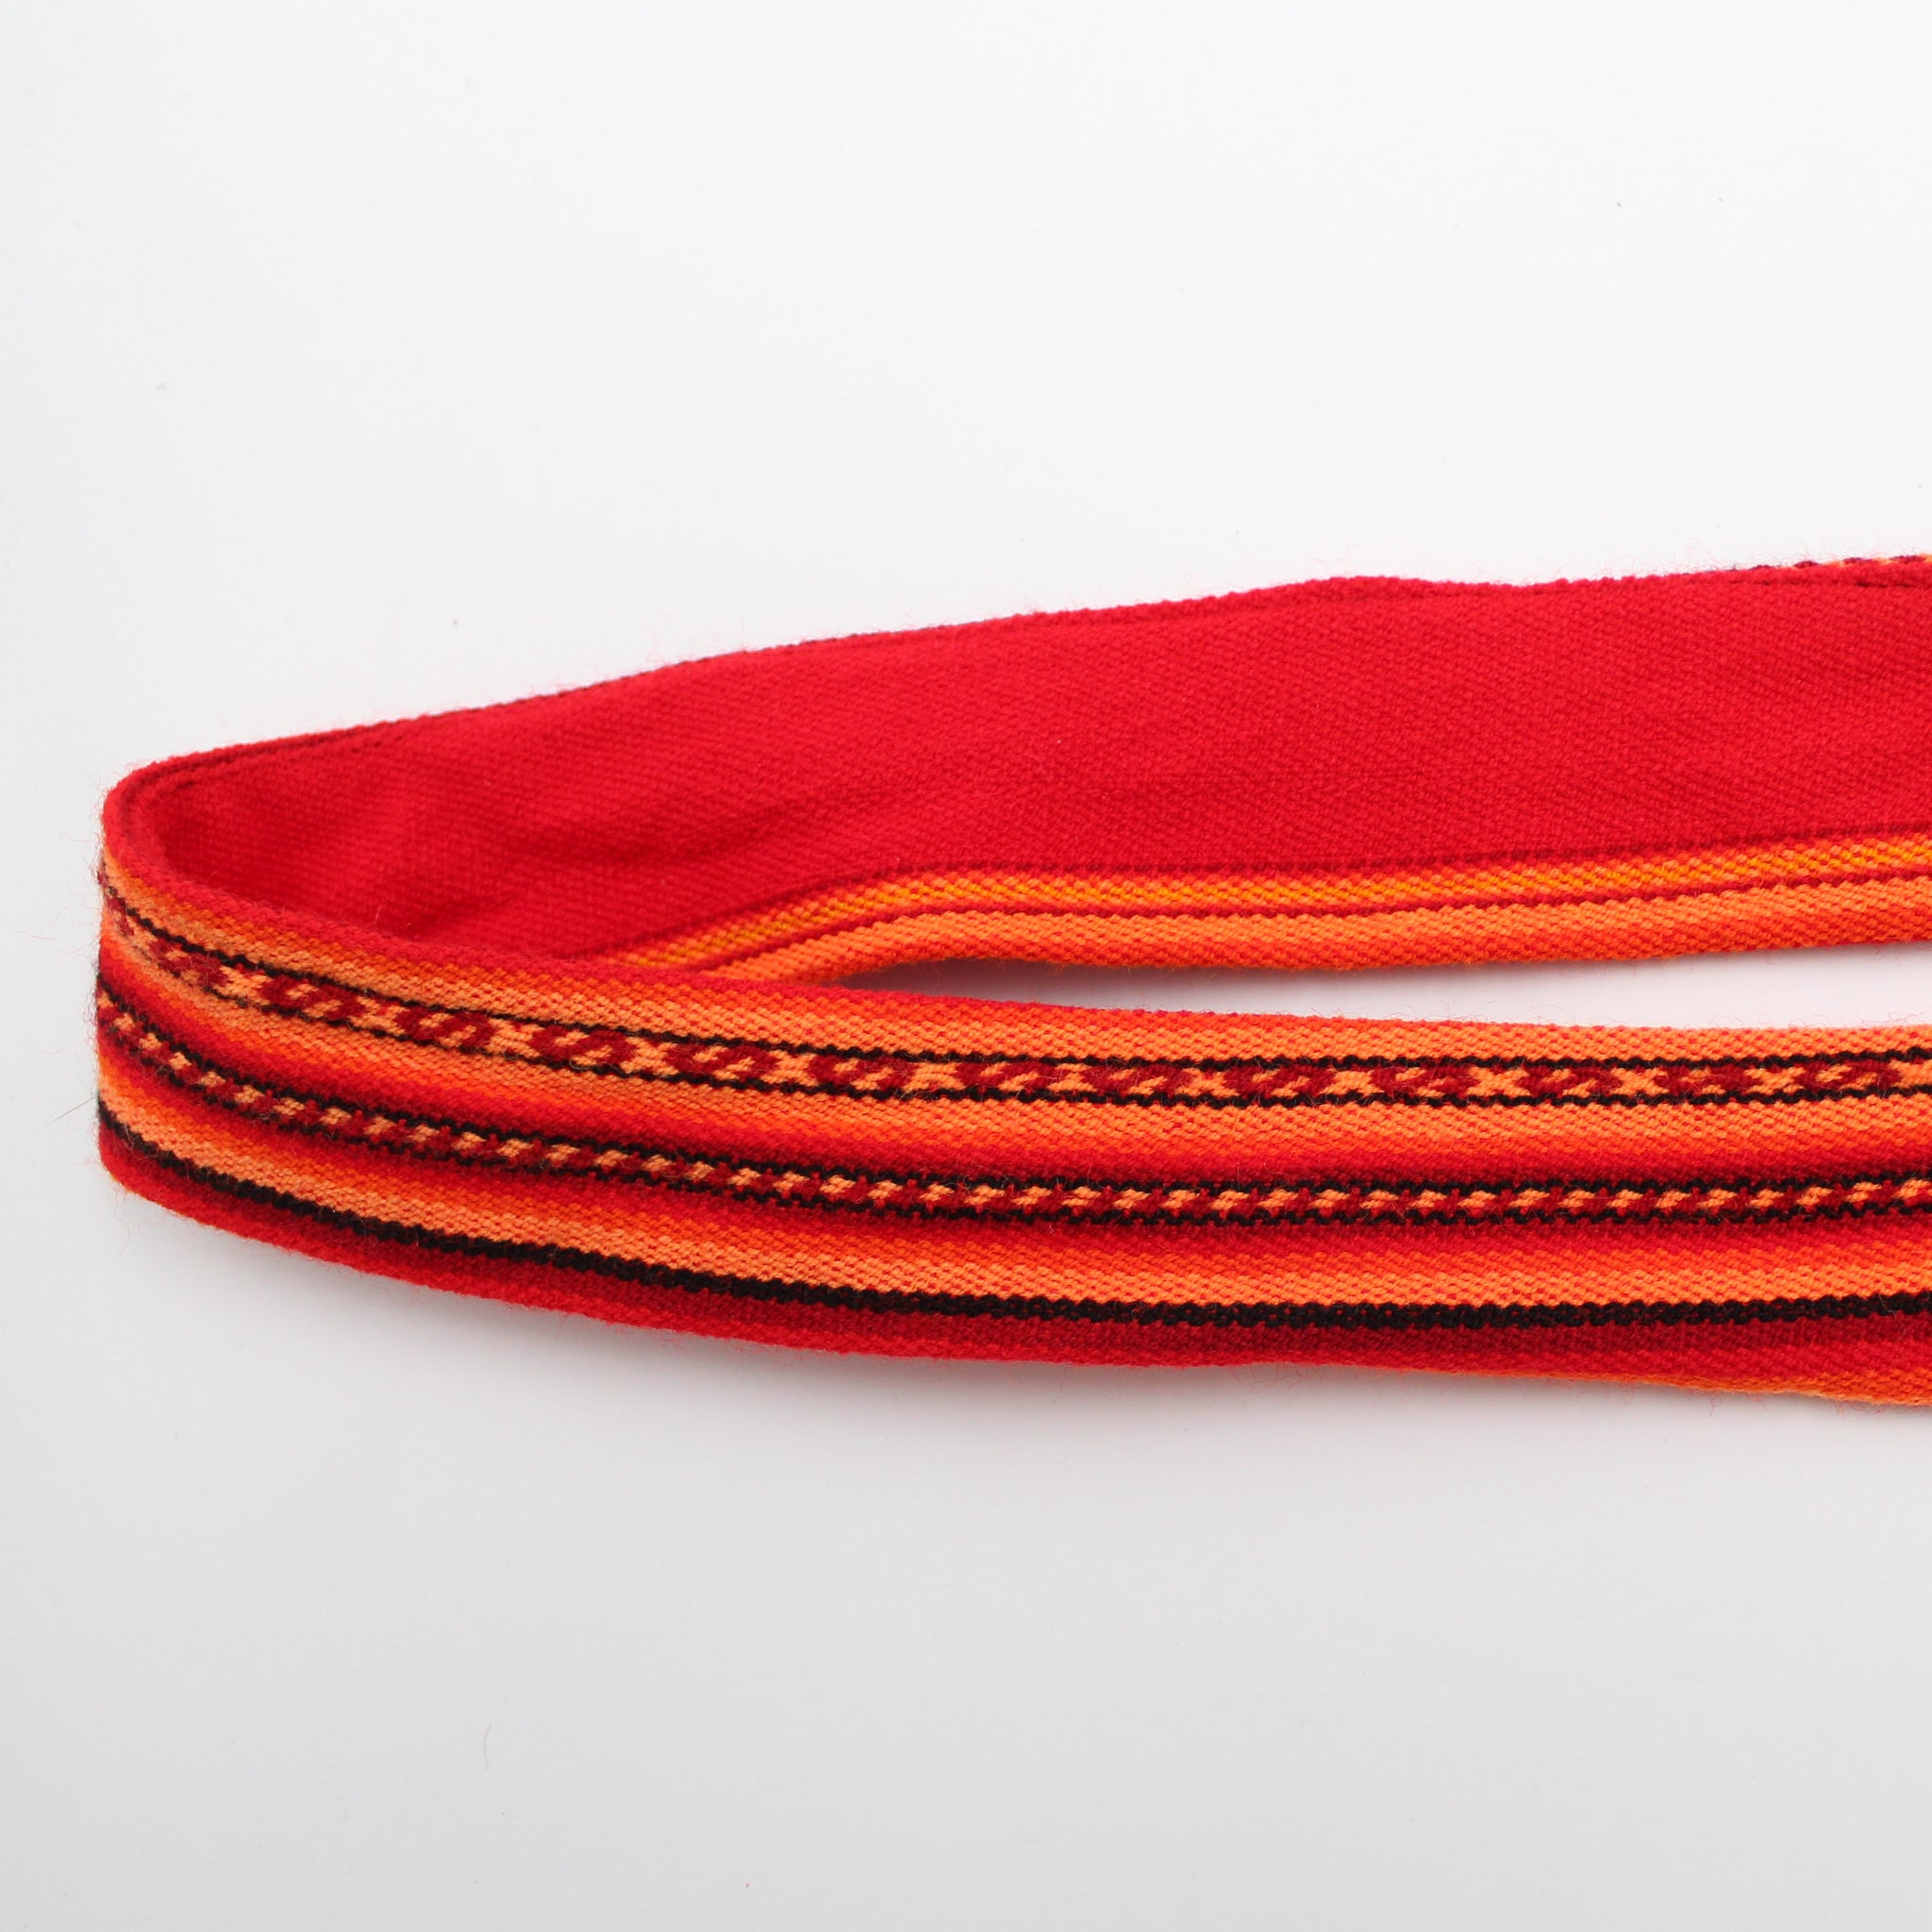 Aguayo Crossbody Bag - Incan Orange and Red